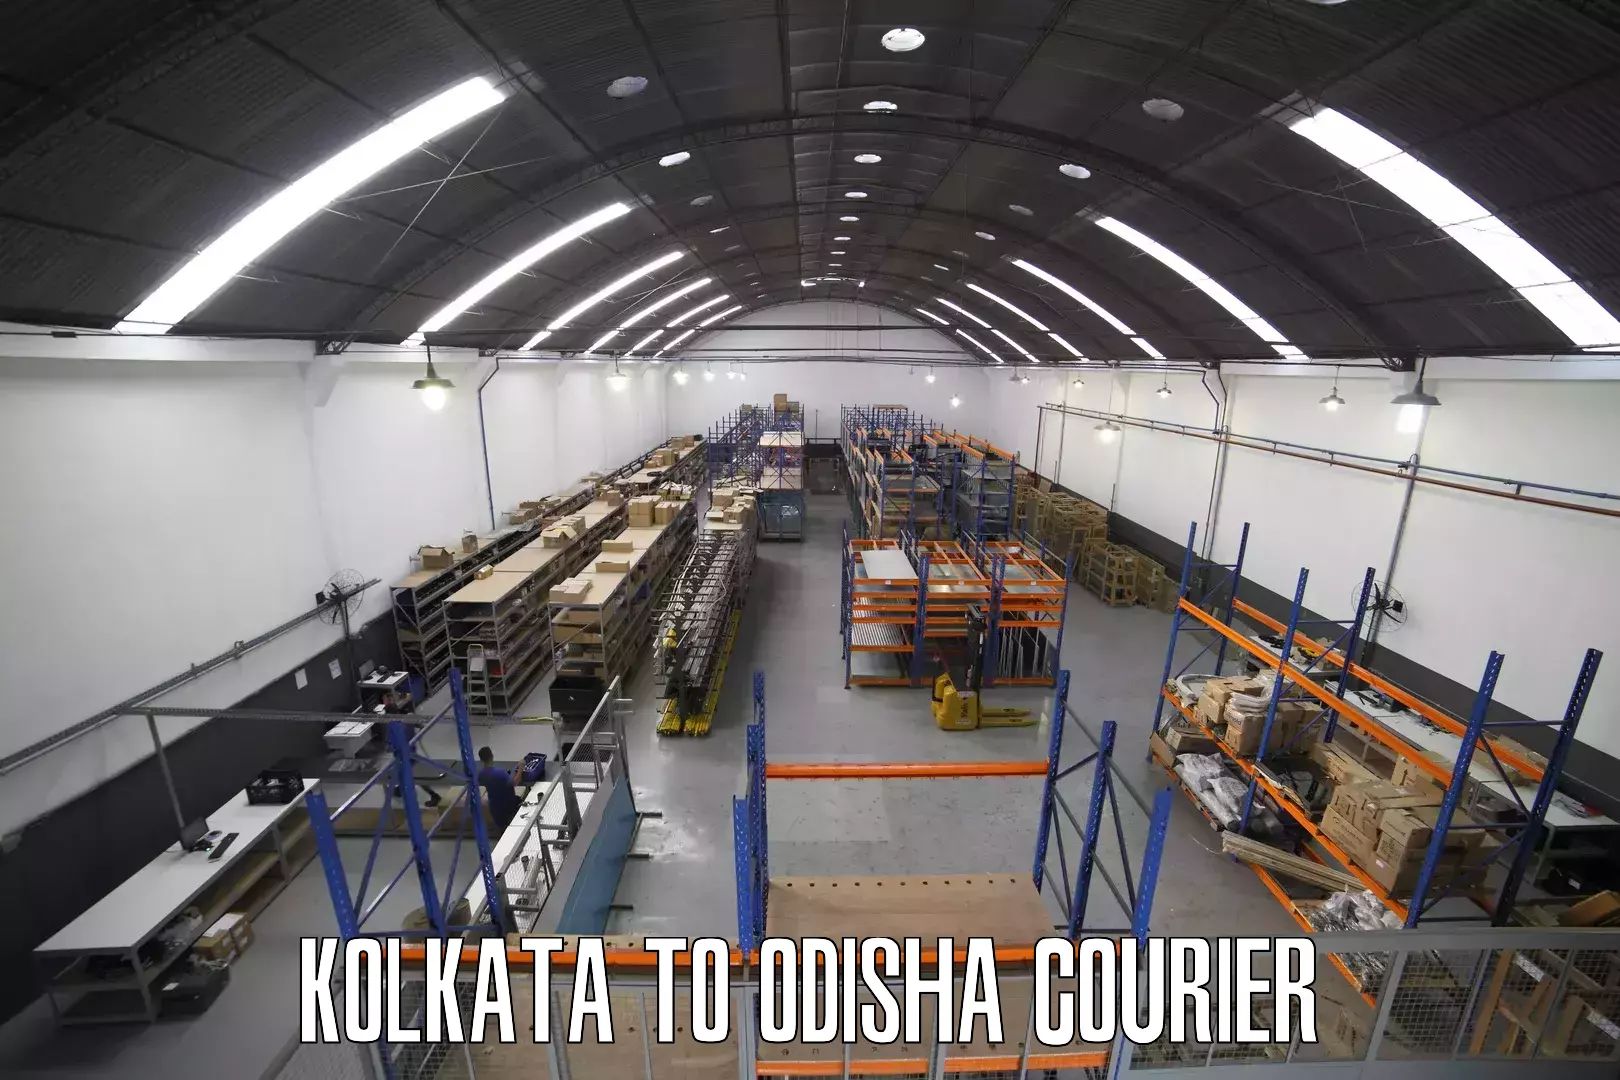 Courier service innovation Kolkata to Asika